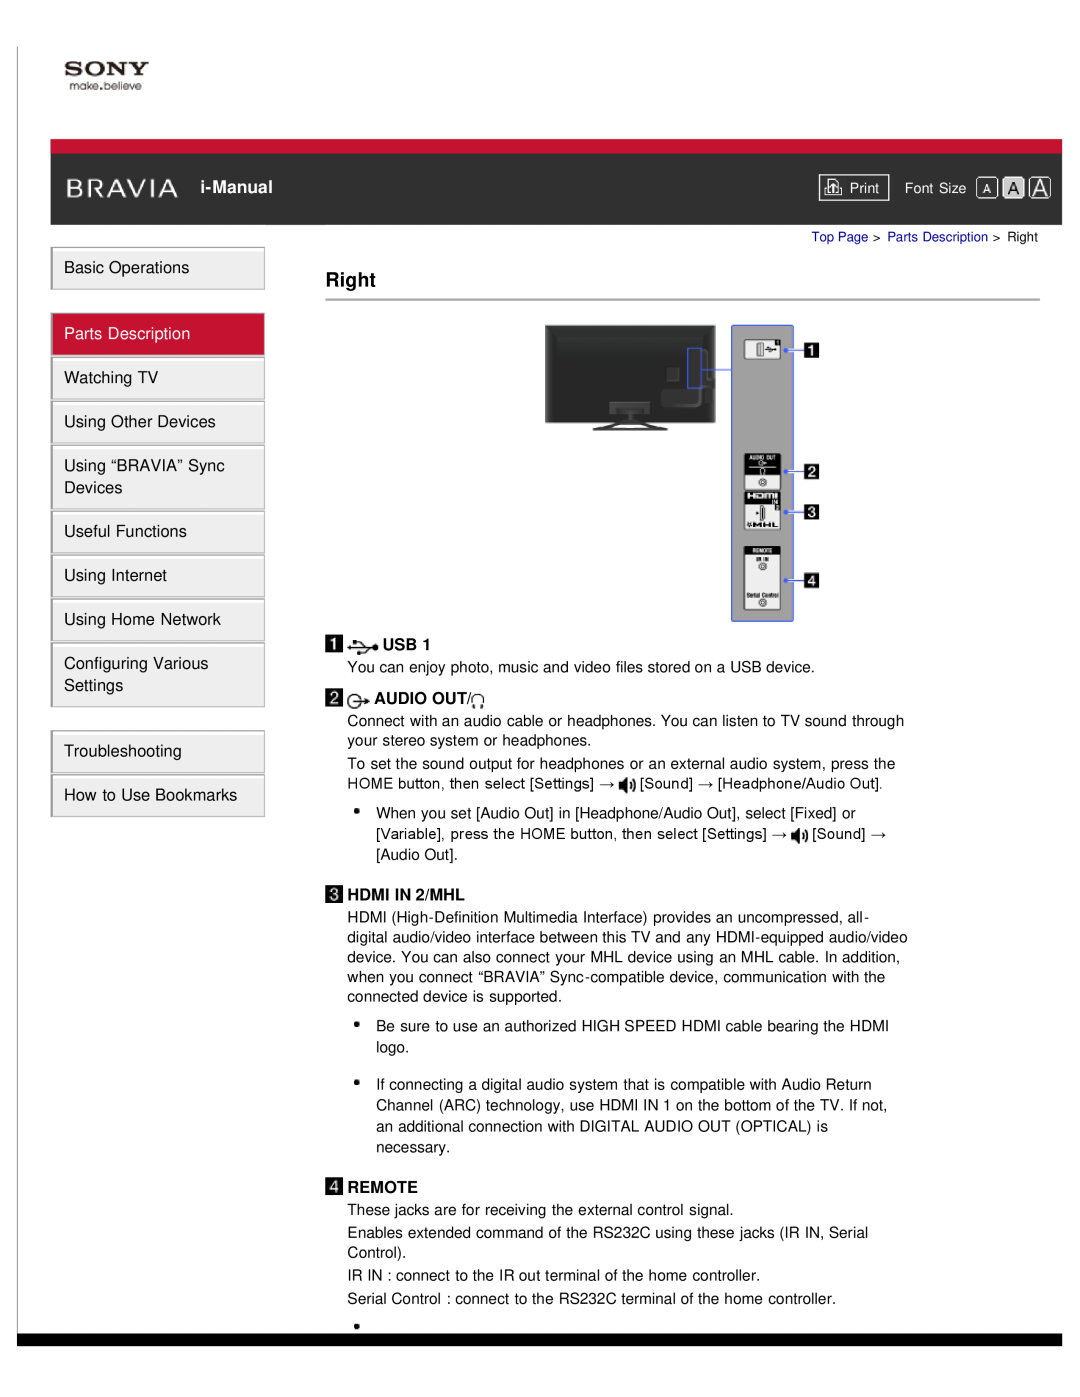 Sony KDL-55W900A, KDL55W900A manual Right, i-Manual, Parts Description, Audio Out, HDMI IN 2/MHL, Remote 